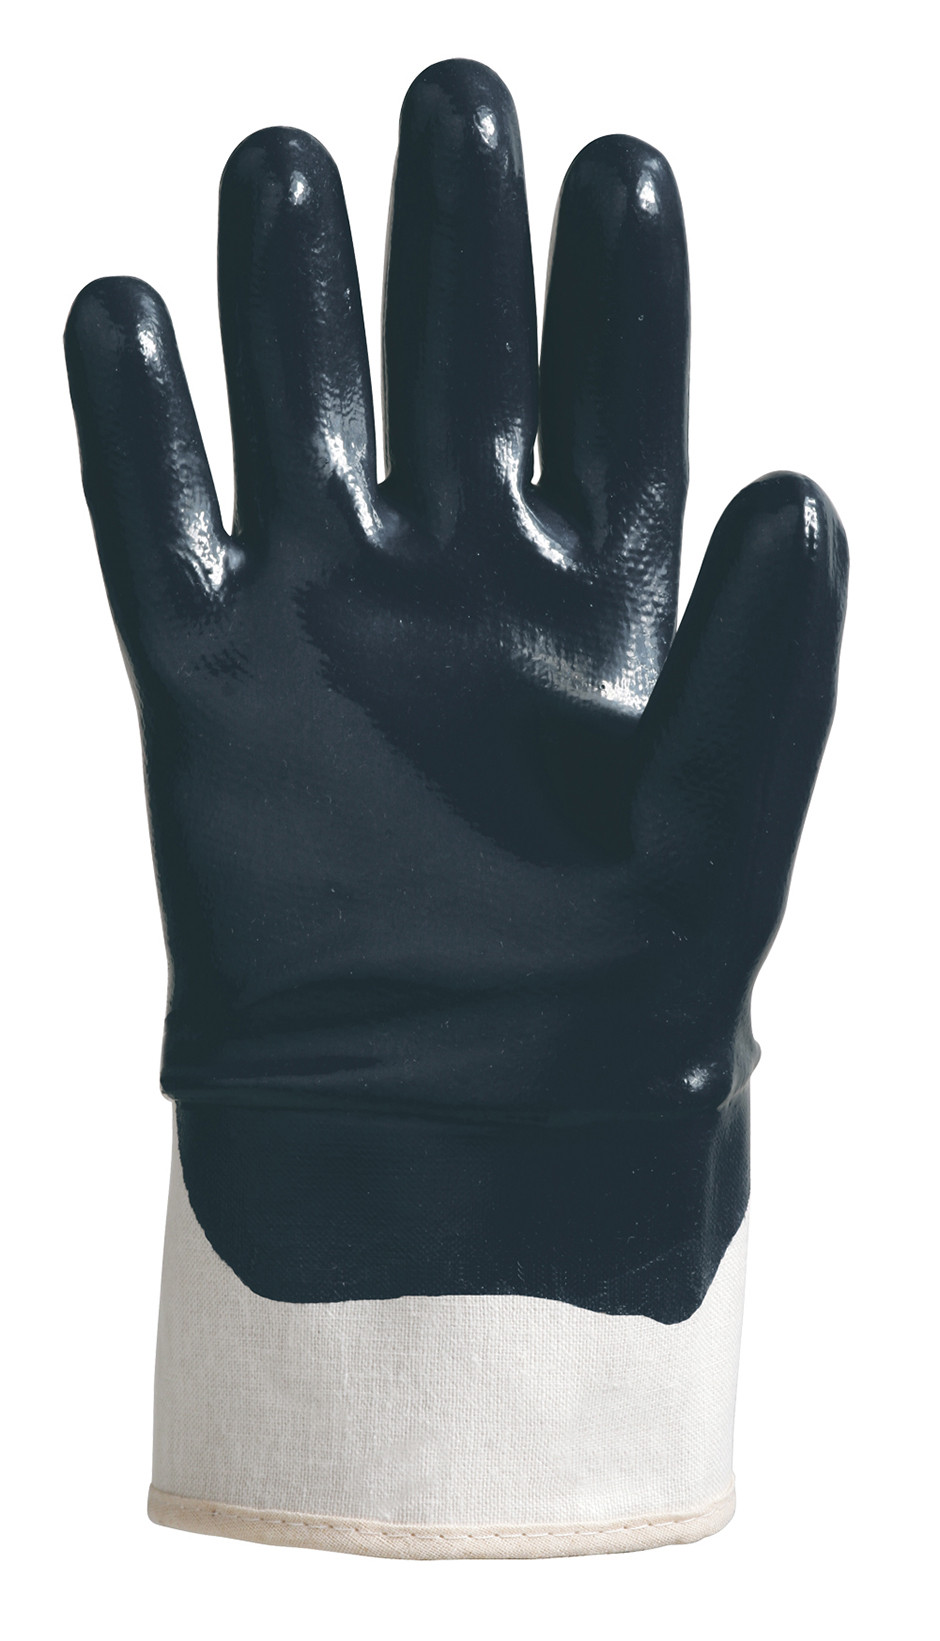 KCL Nitex Handschuhe 319 10 Schutzhandschuhe Arbeitshandschuhe 10er Pack Gr 